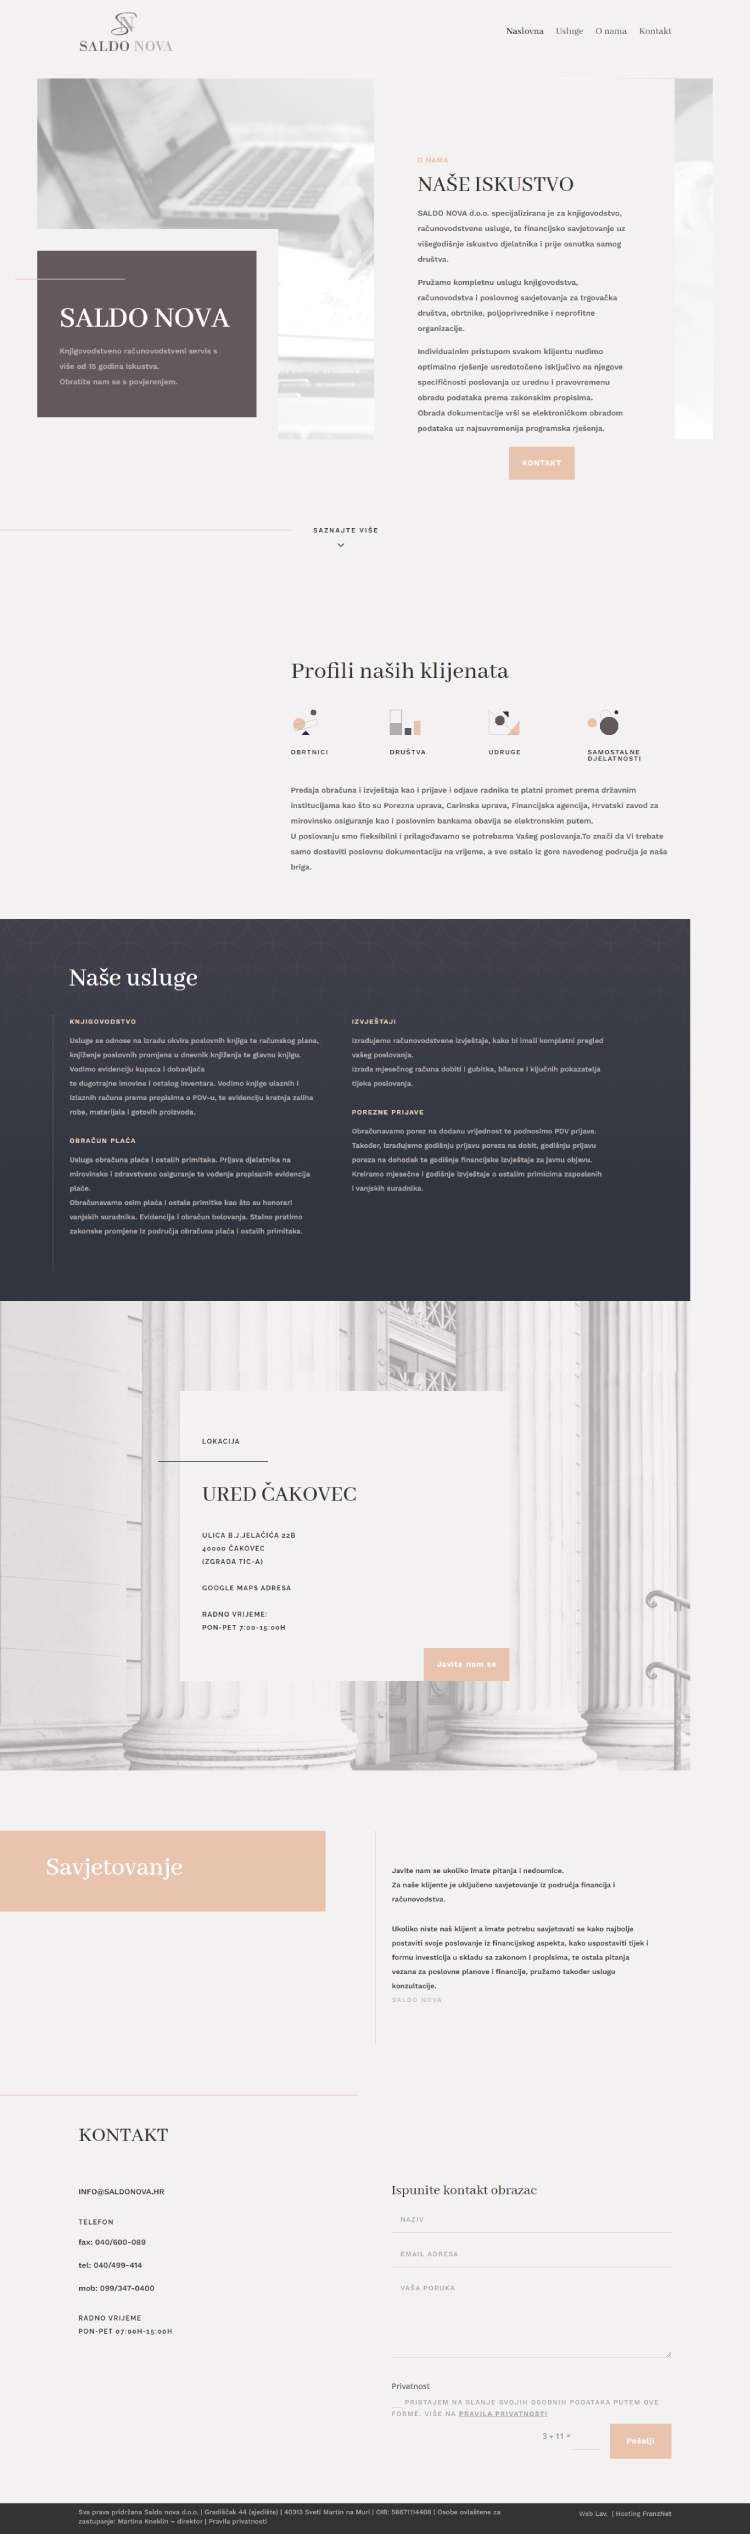 meli web designer portfolio - accountant page Saldonova